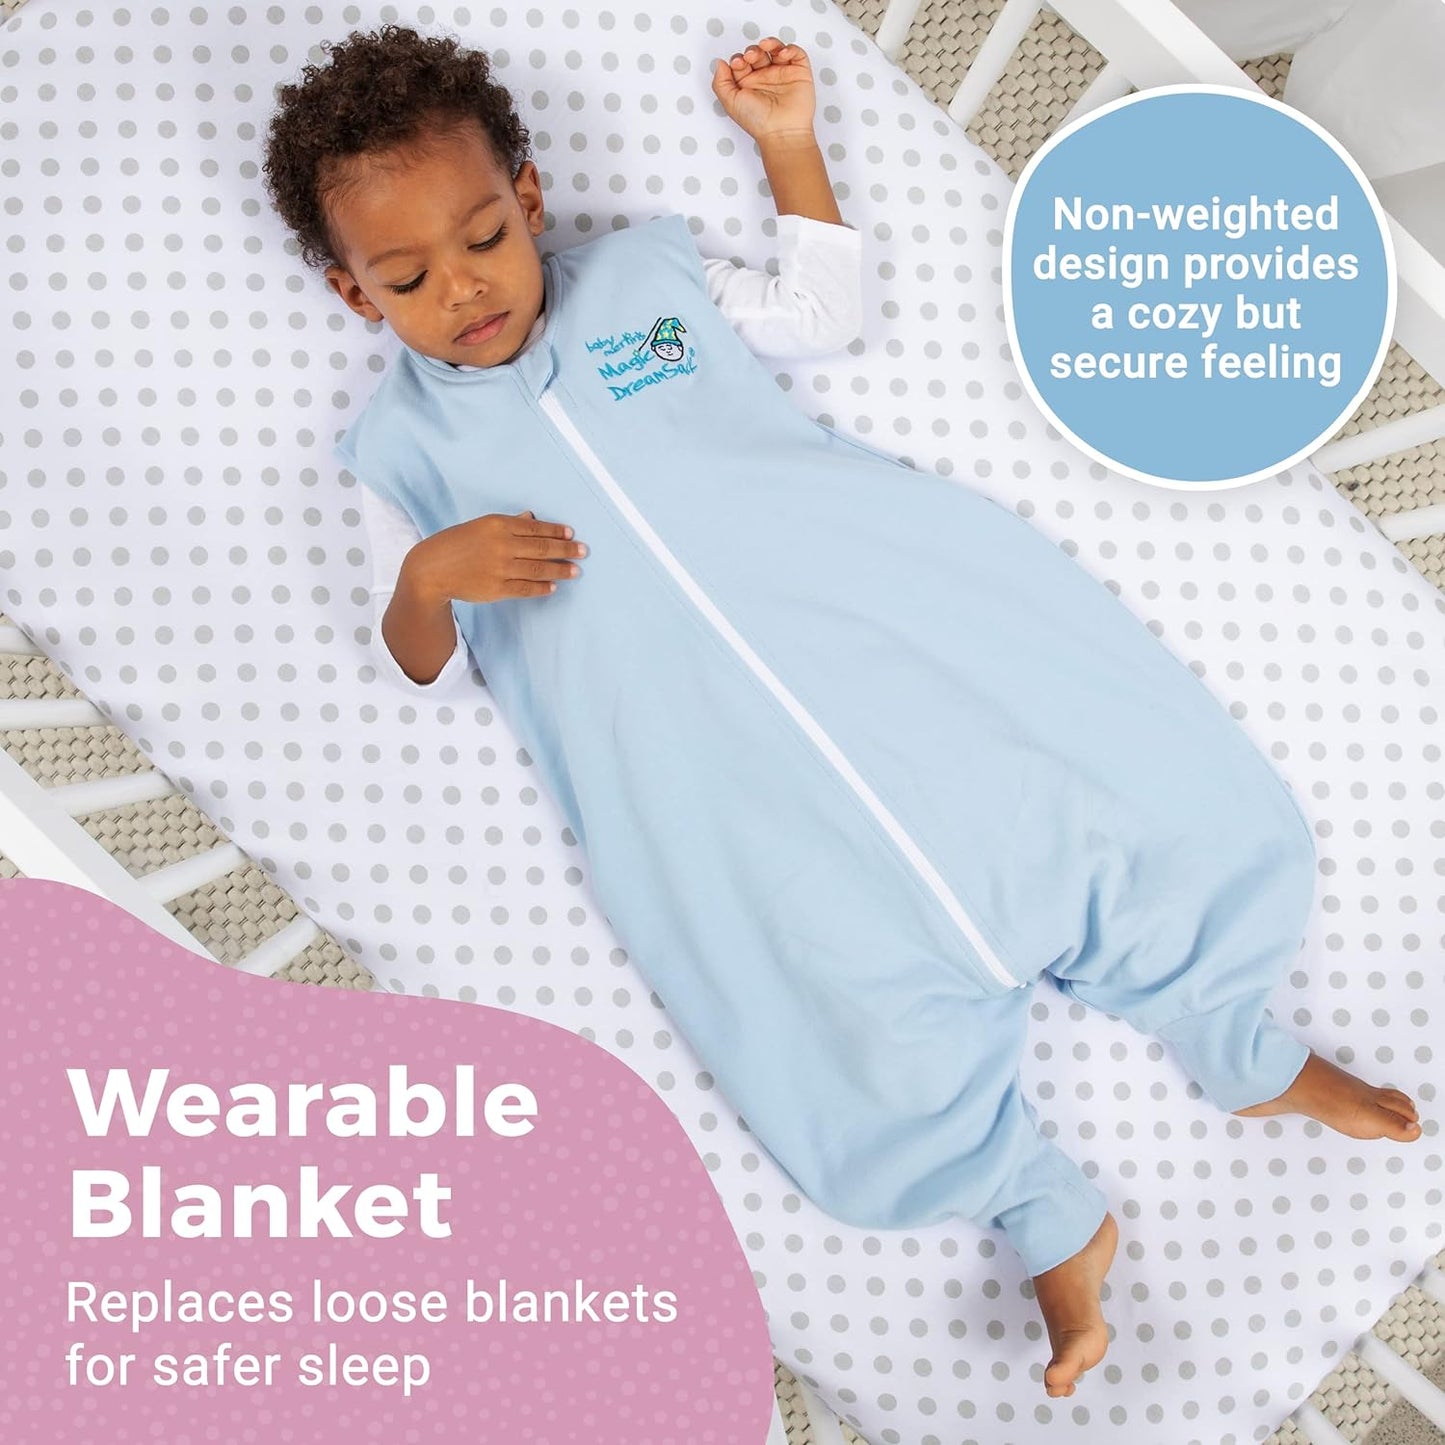 Baby Merlin's Magic Dream Sleep Sack - 100% Cotton Baby Wearable Blanket - Baby Sleep Sack 6-12 Months - Forest Friends